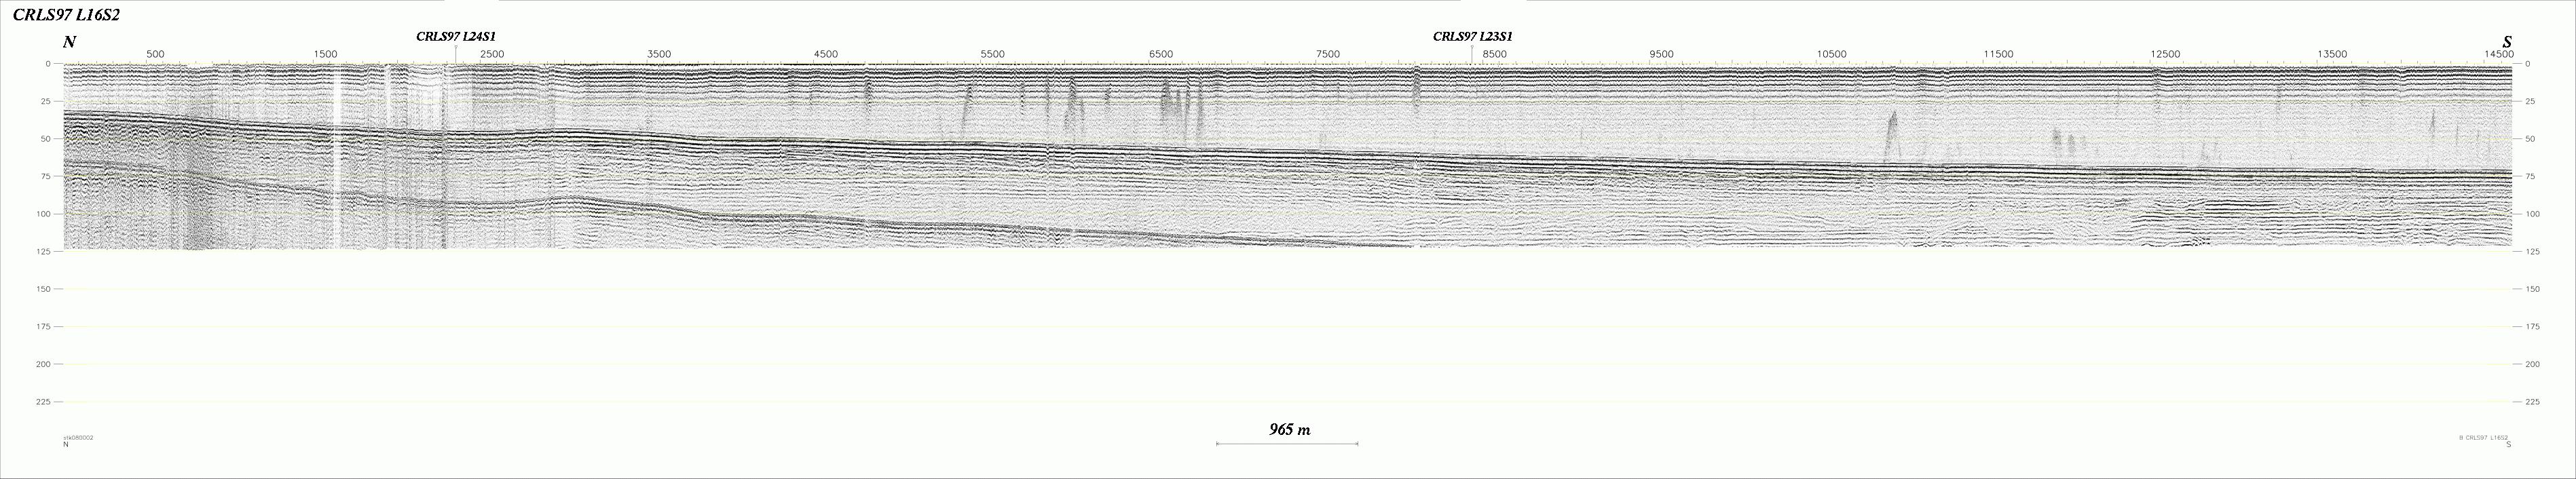 Seismic Reflection Profile Line No.: L16s2 (462444 bytes)